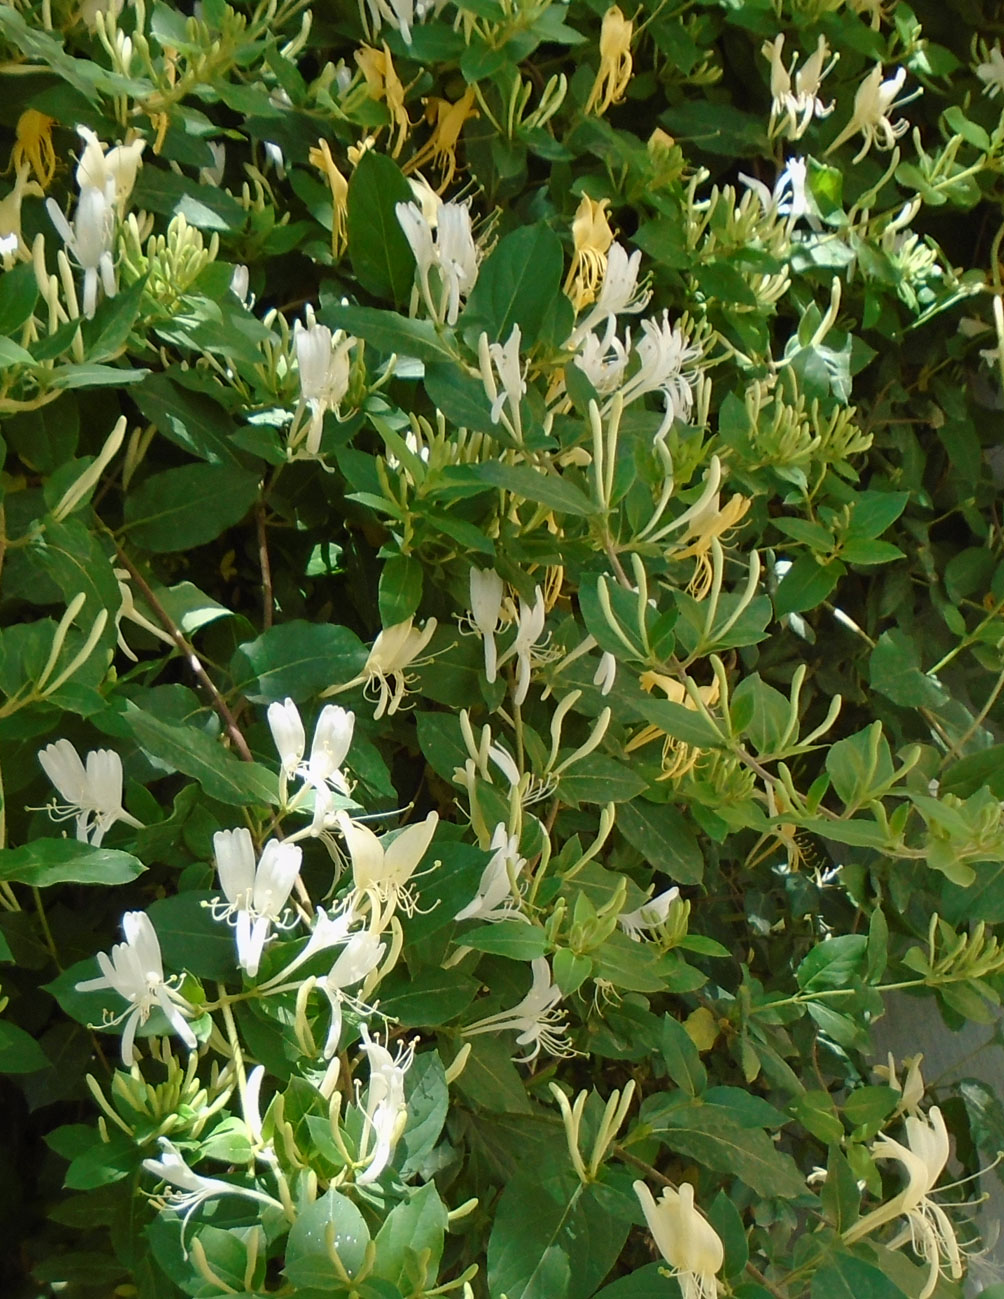 Image of Lonicera japonica specimen.